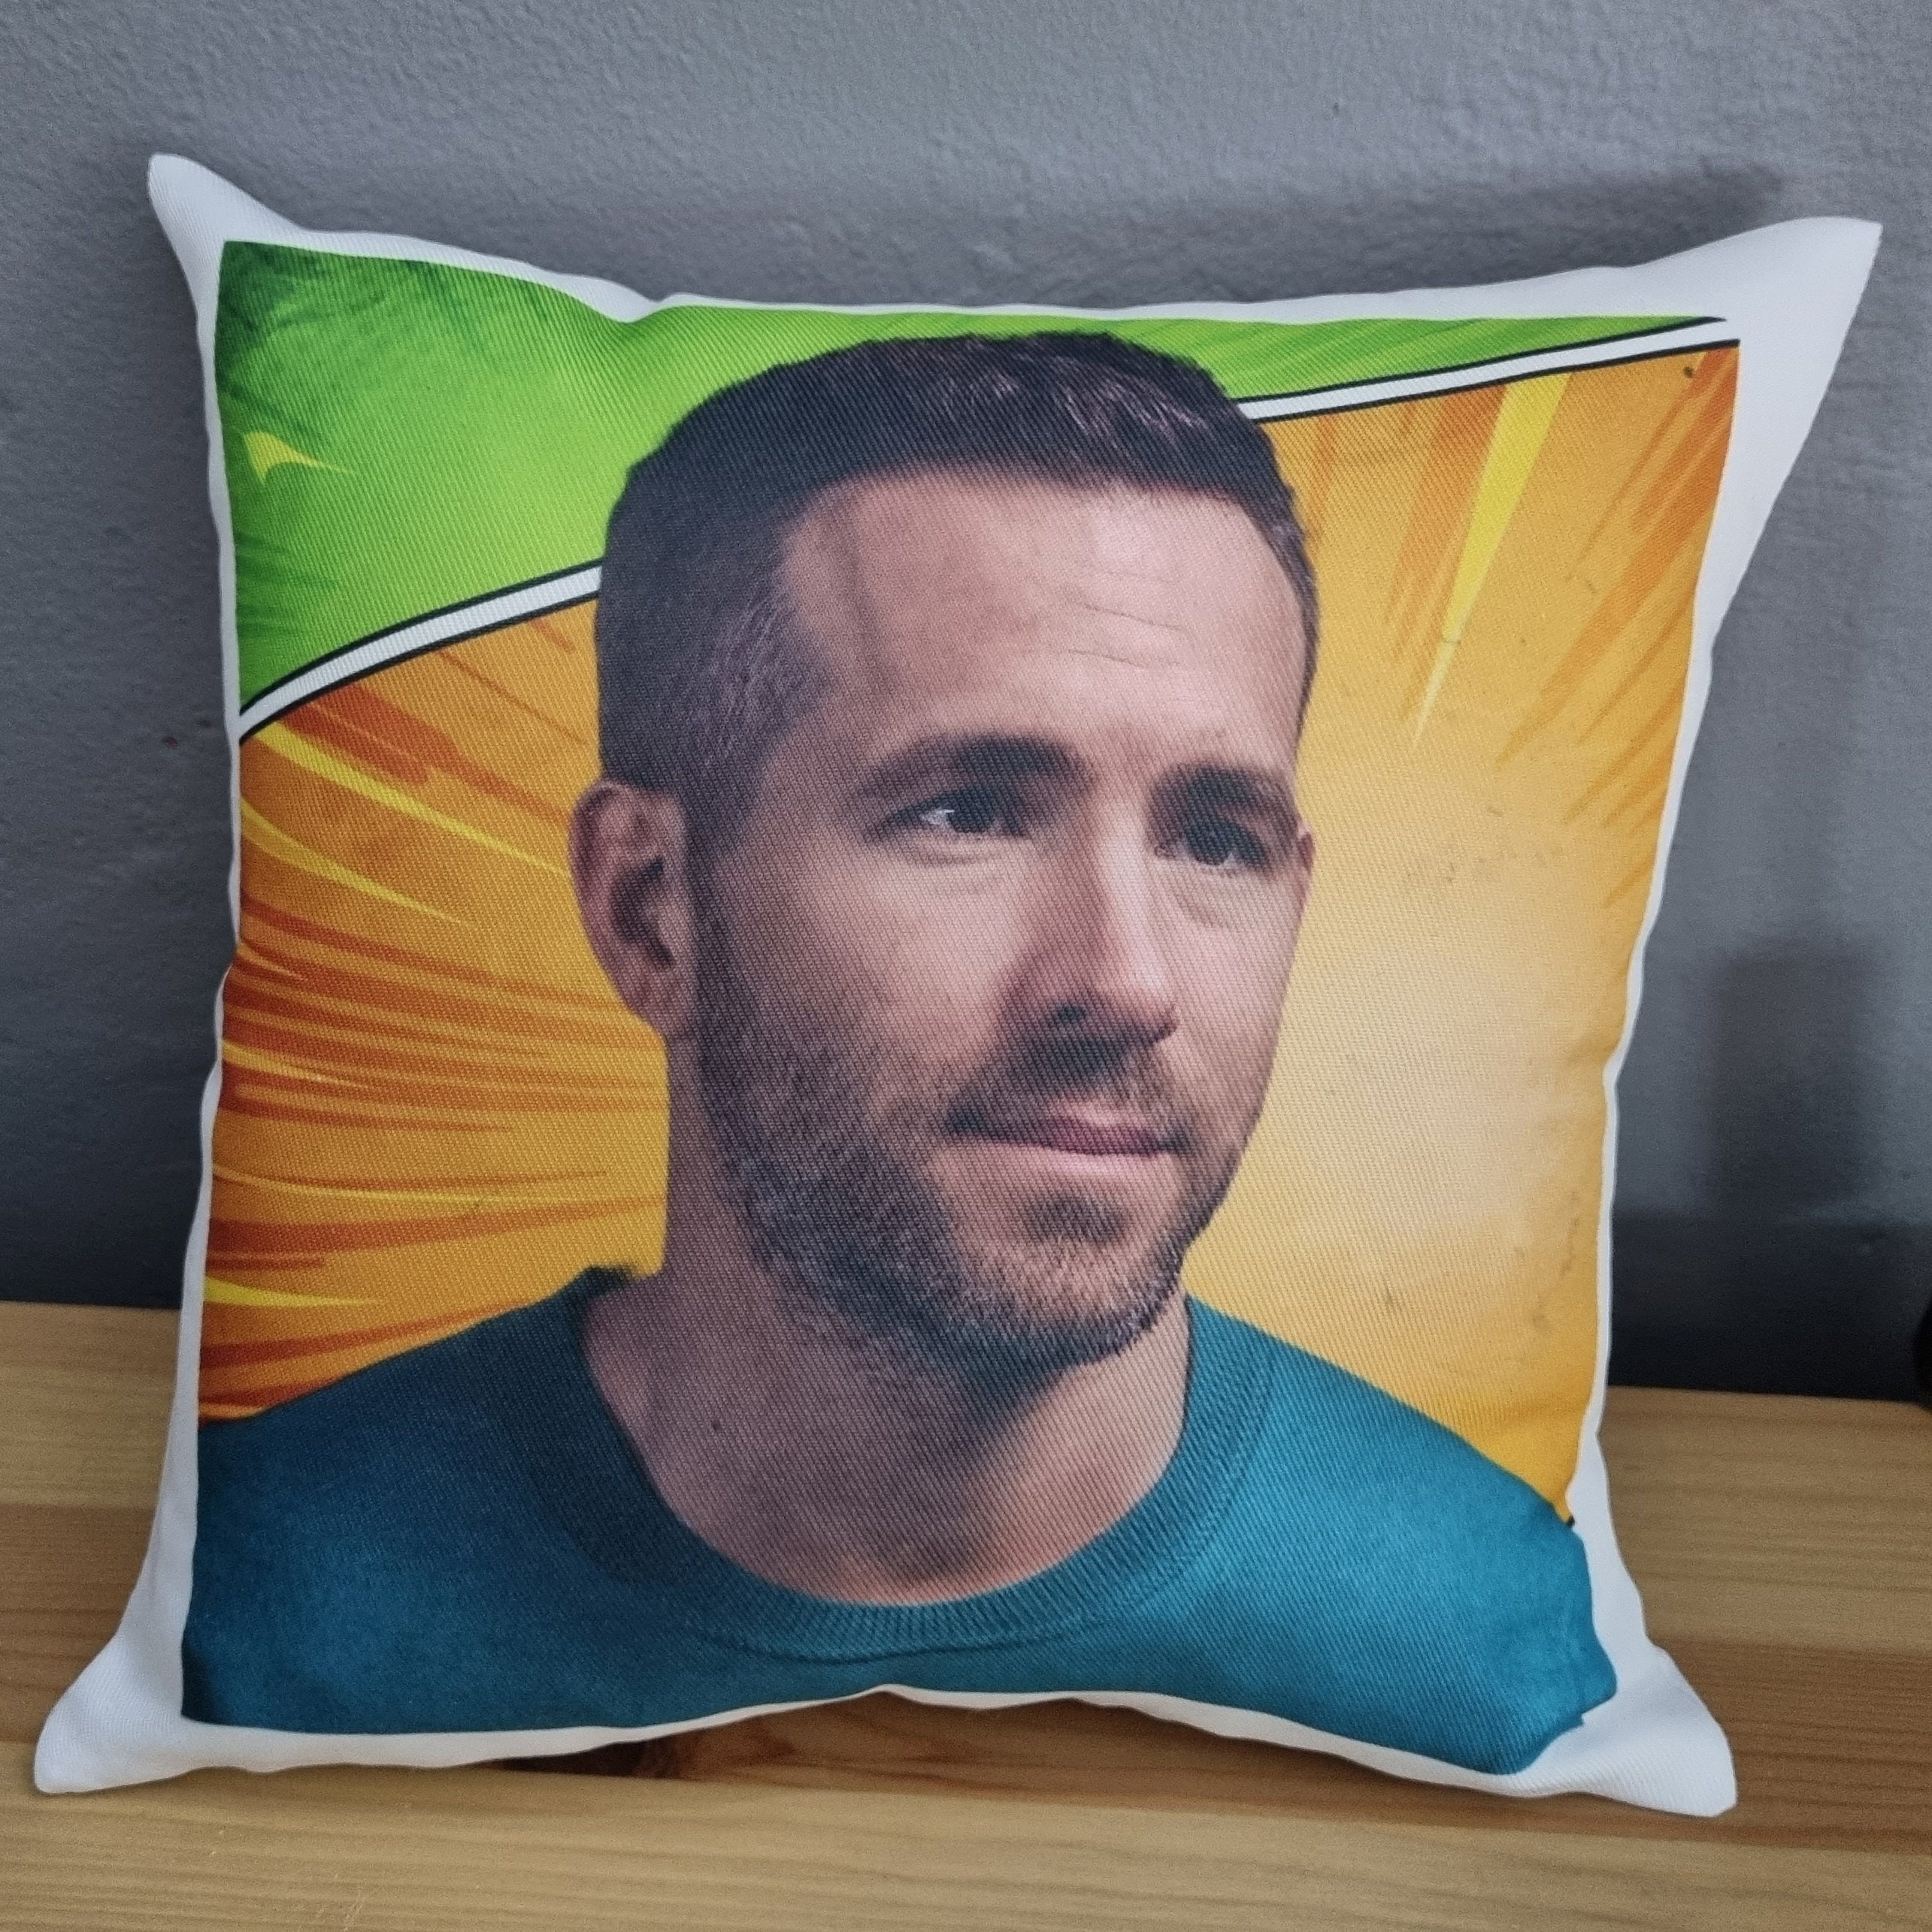 Ryan Reynolds Cushion Cover Photo Fan Art Gift 